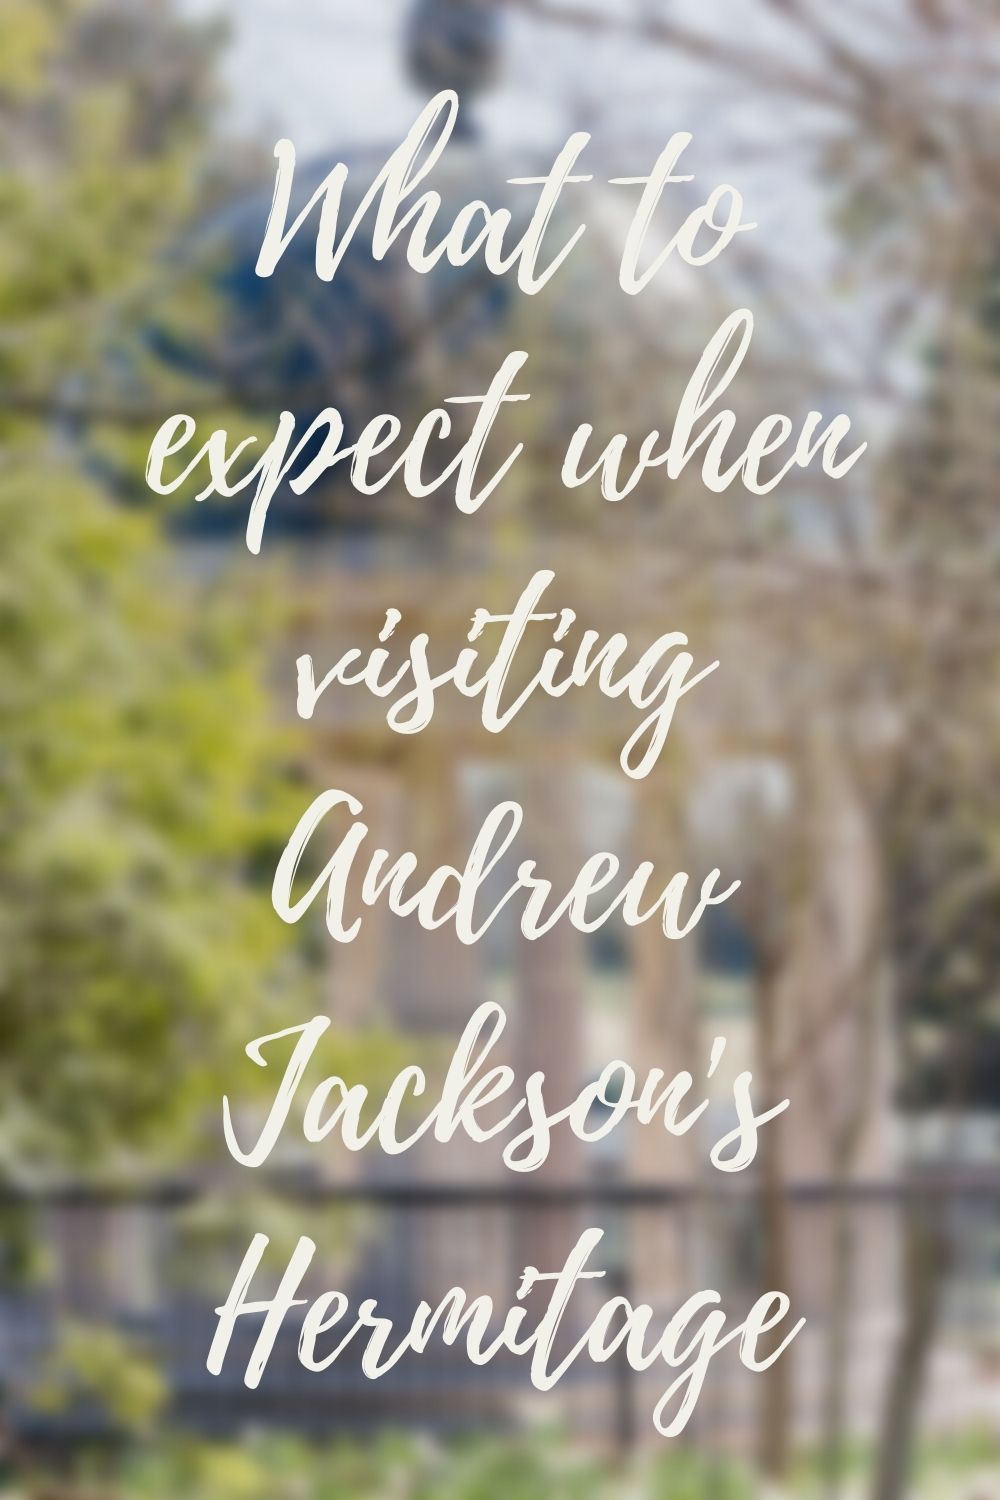 Visit Andrew Jackson's Hermitage in Nashville